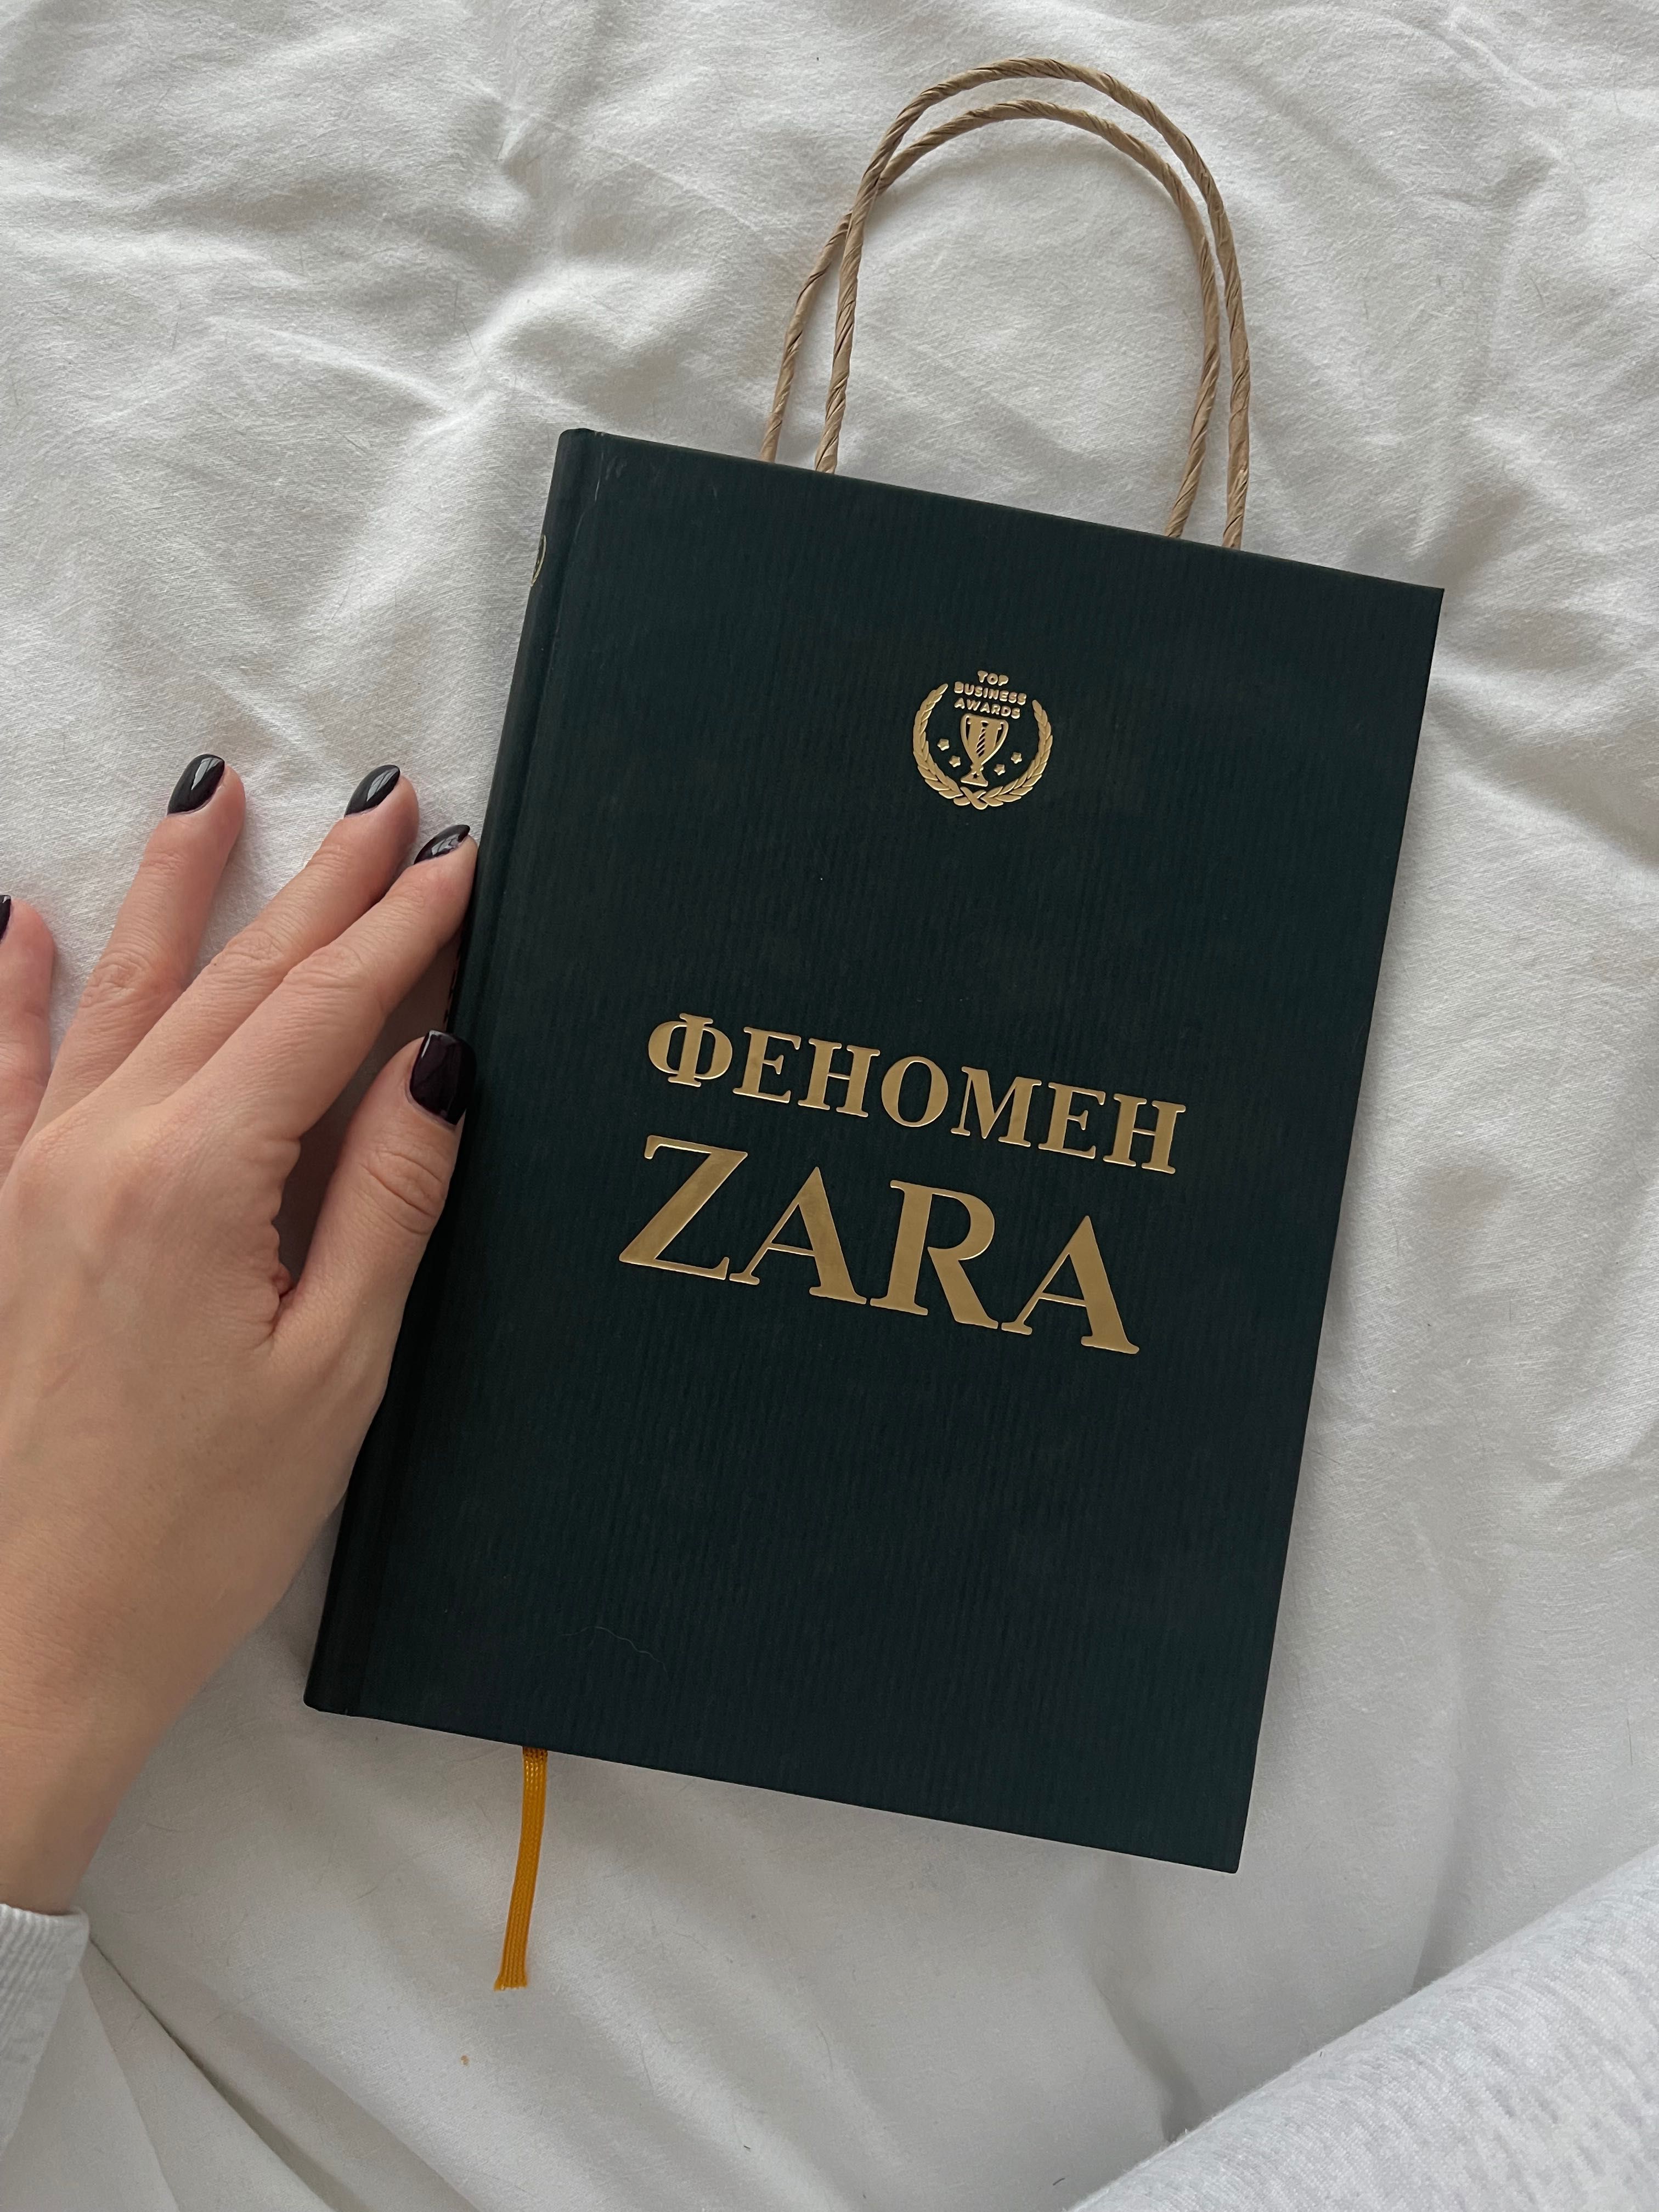 Книга Феномен Zara